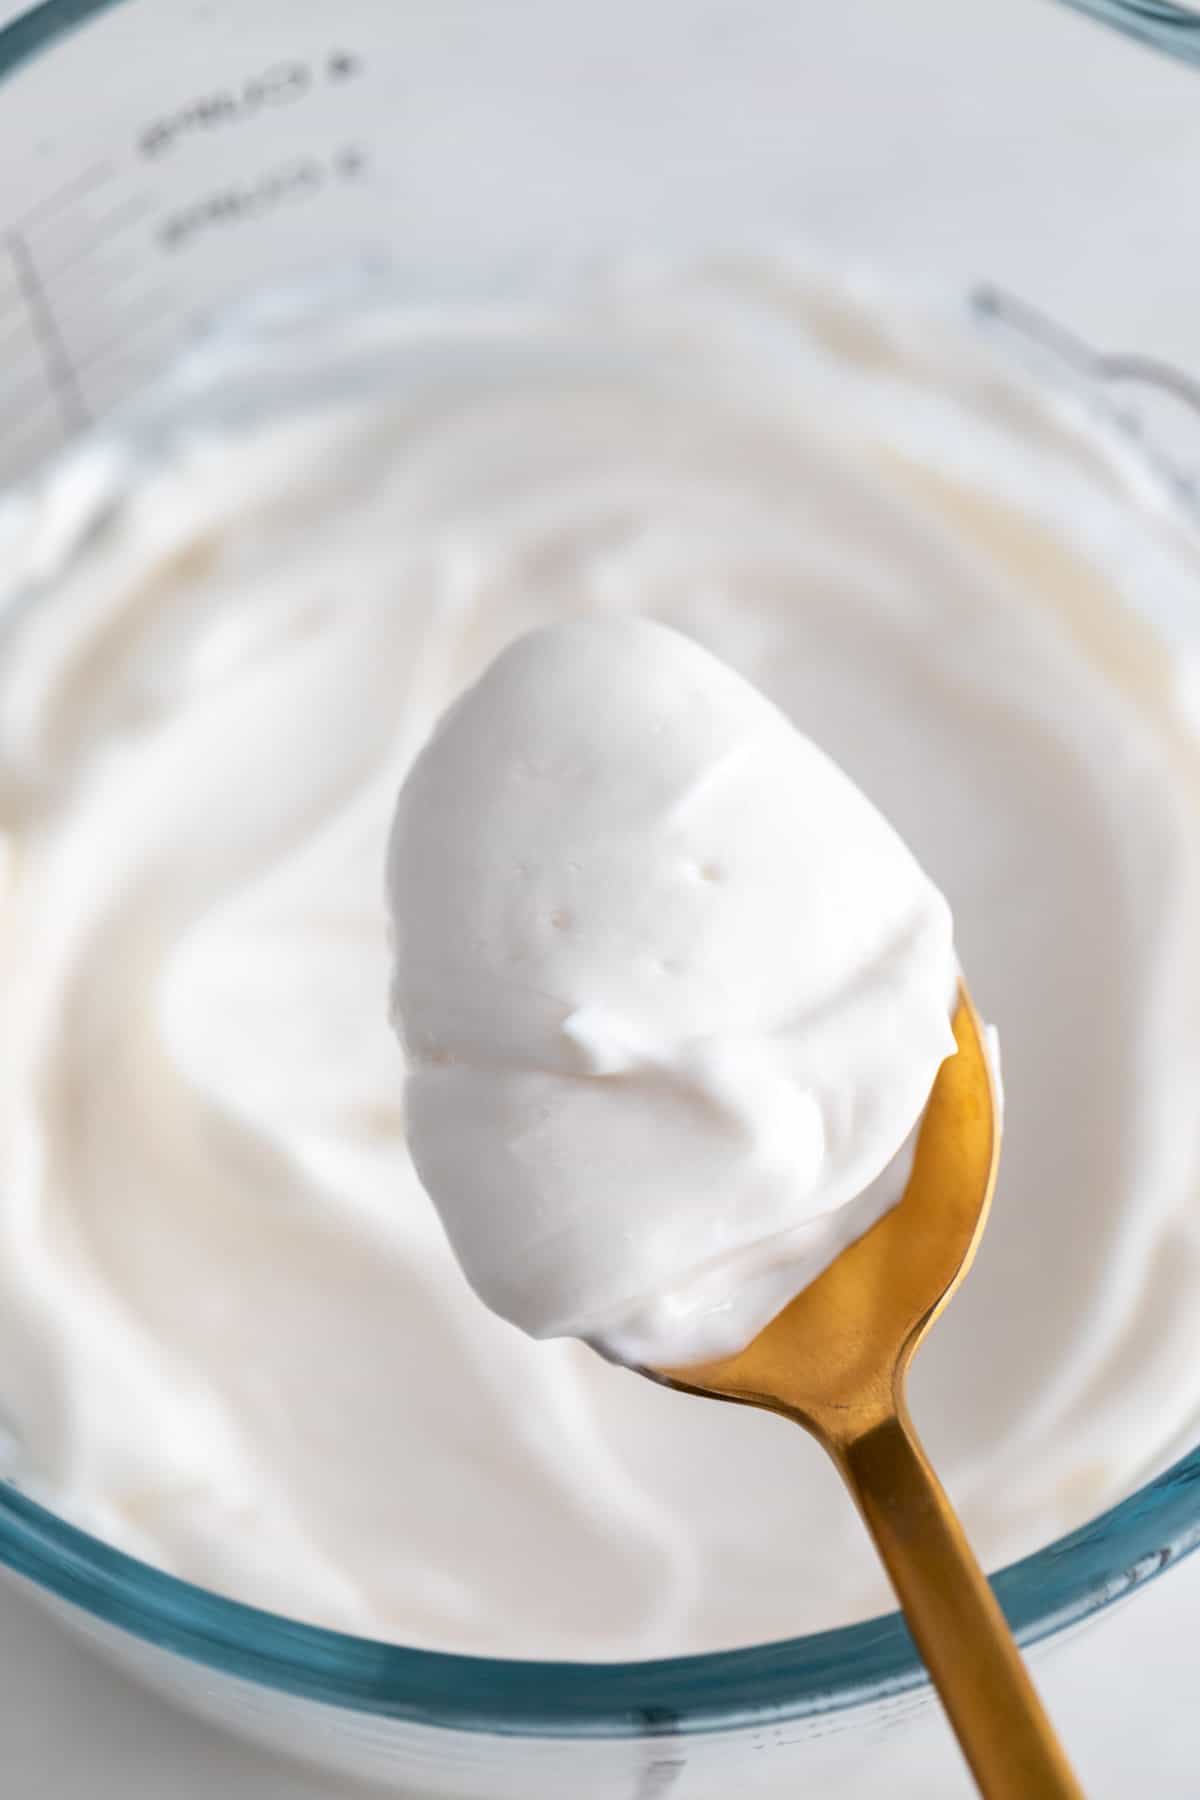 A spoon with vegan mayonnaise.